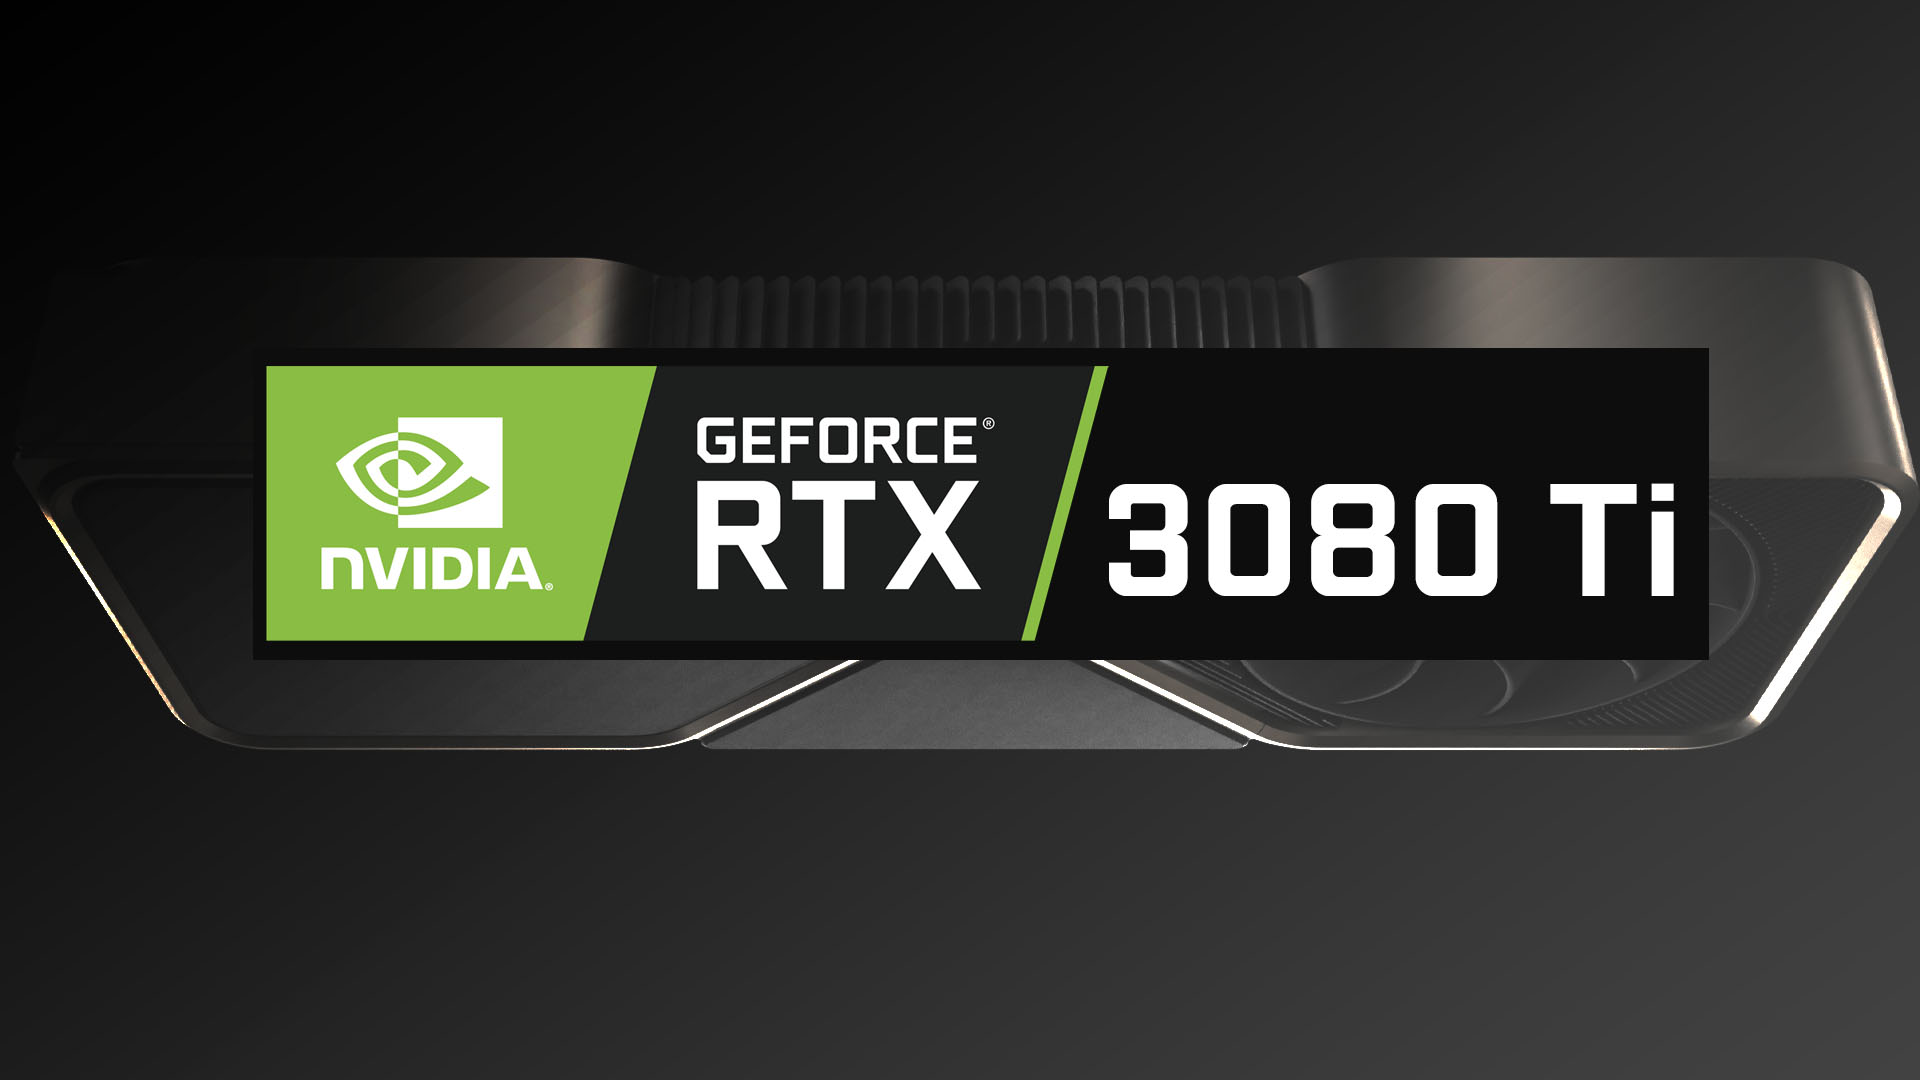 GeForce RTX 3080 Tiの写真が出現。5月25日ローンチ予定か